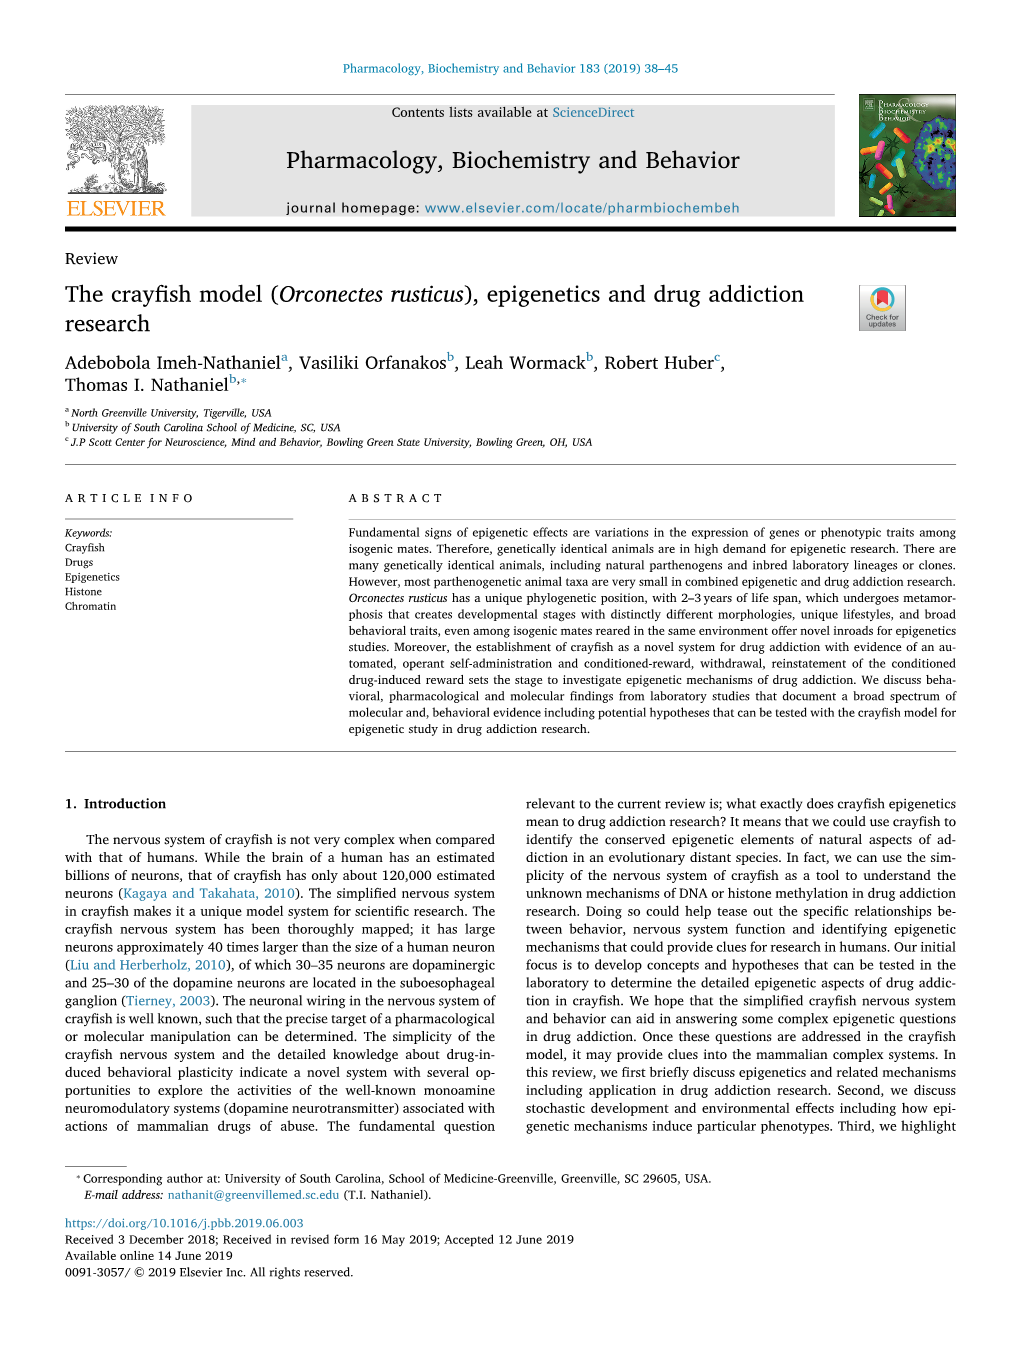 Epigenetics and Drug Addiction Research T